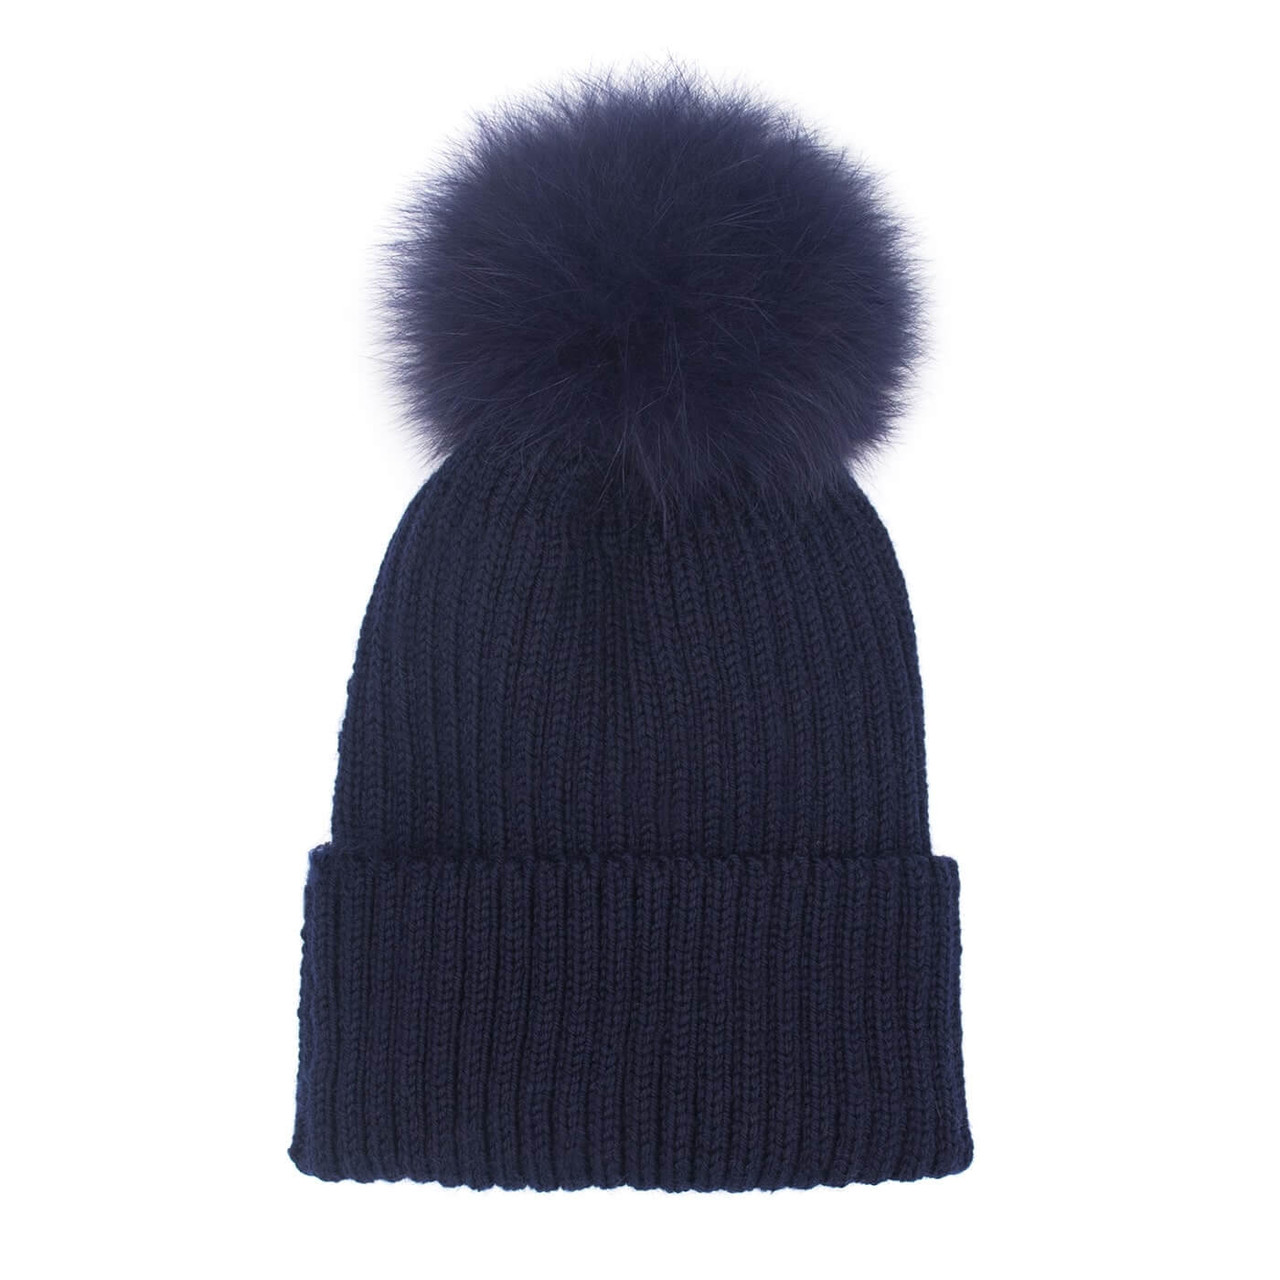 Surell Accessories Knit Hat with Fox Fur Detachable Pom